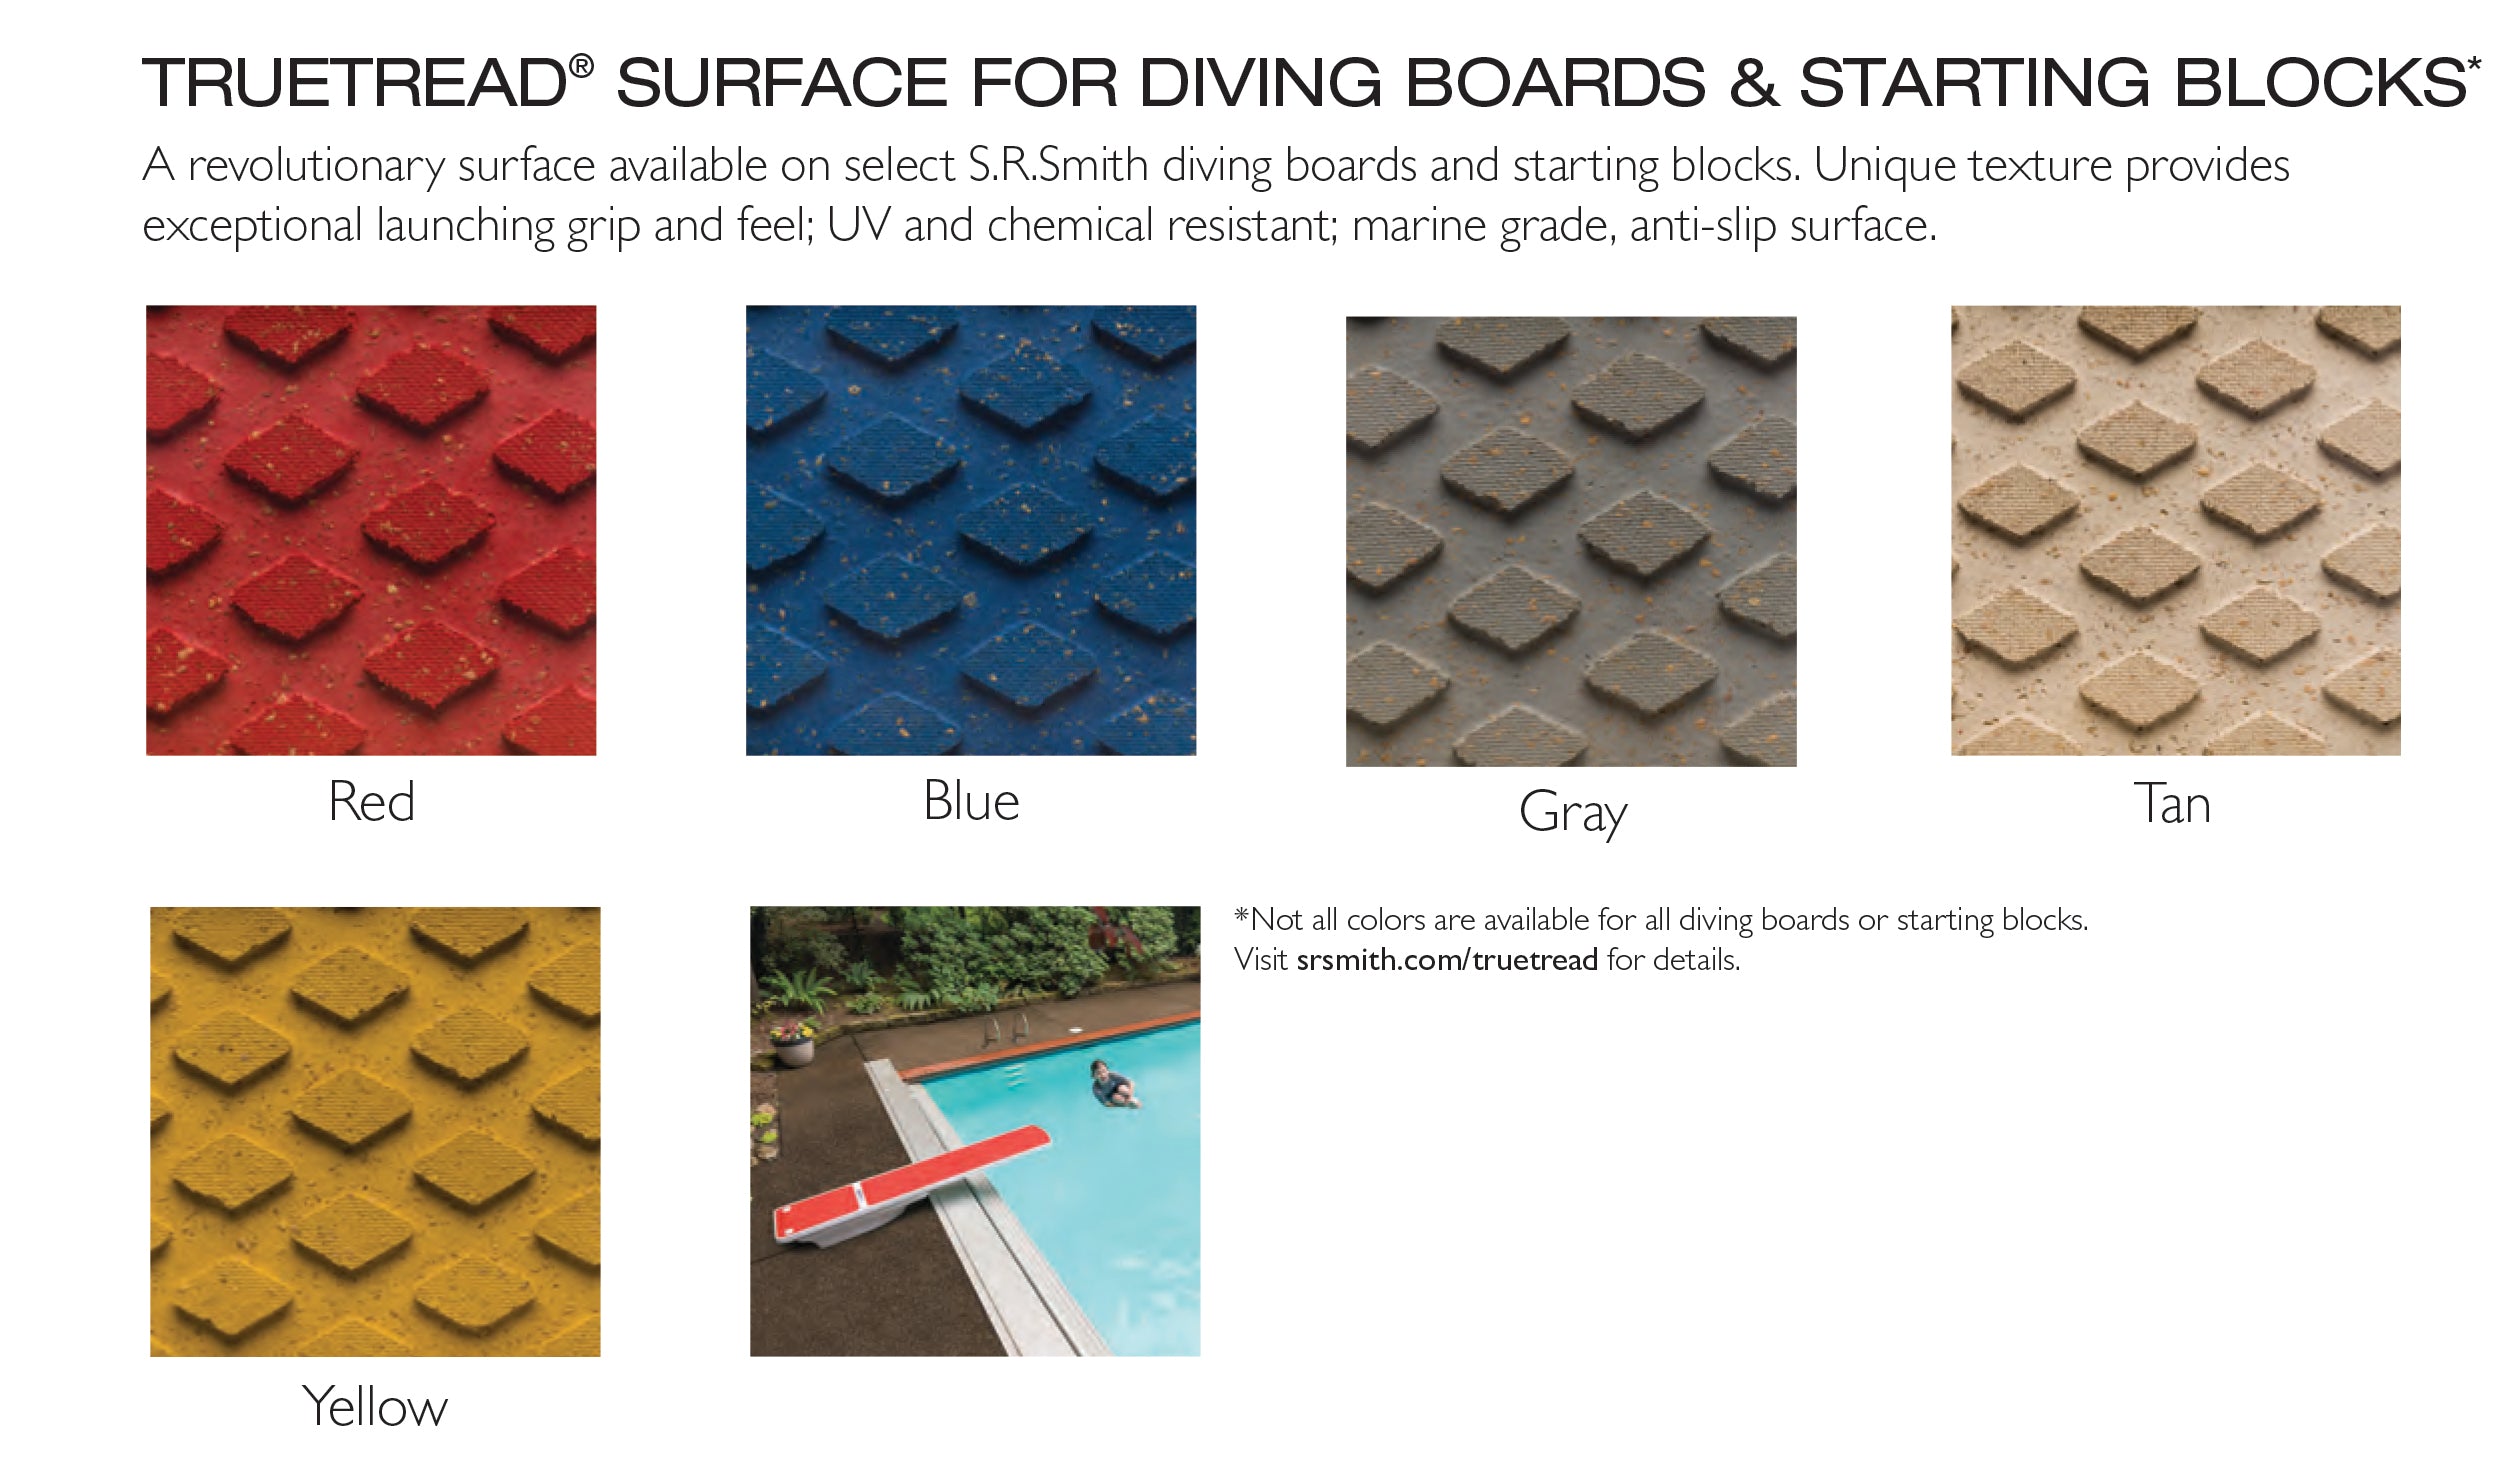 Flyte Deck II Stand With 6 Foot TrueTread Board - Taupe Stand With Taupe Board and Tan TrueTread